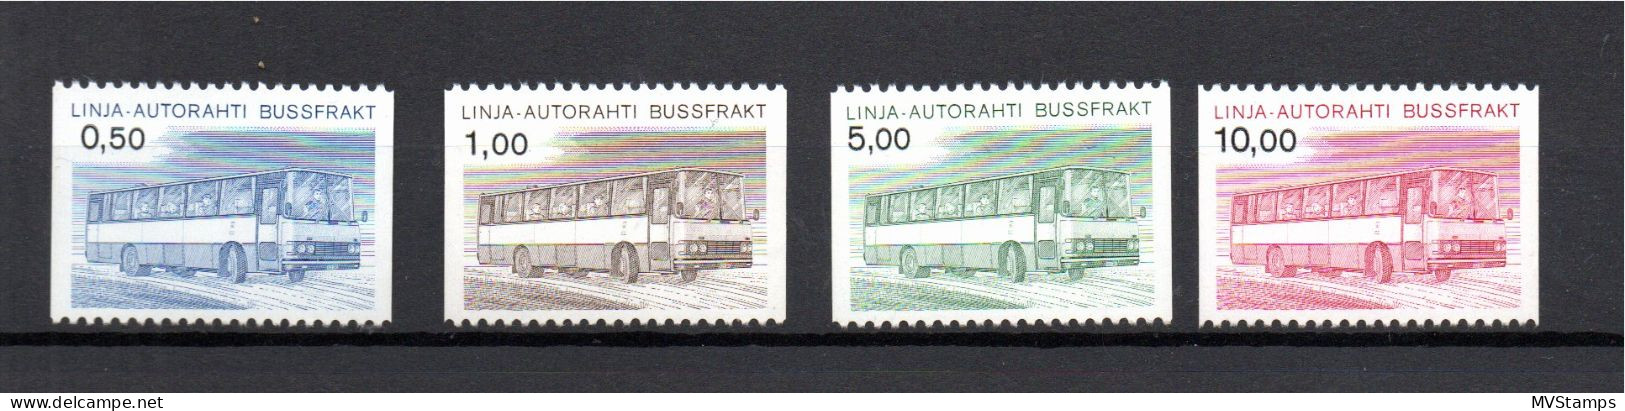 Finland 1981 Set Cars/bus/automobile Stamps (Michel APM 14/17) Nice MNH - Postbuspakete